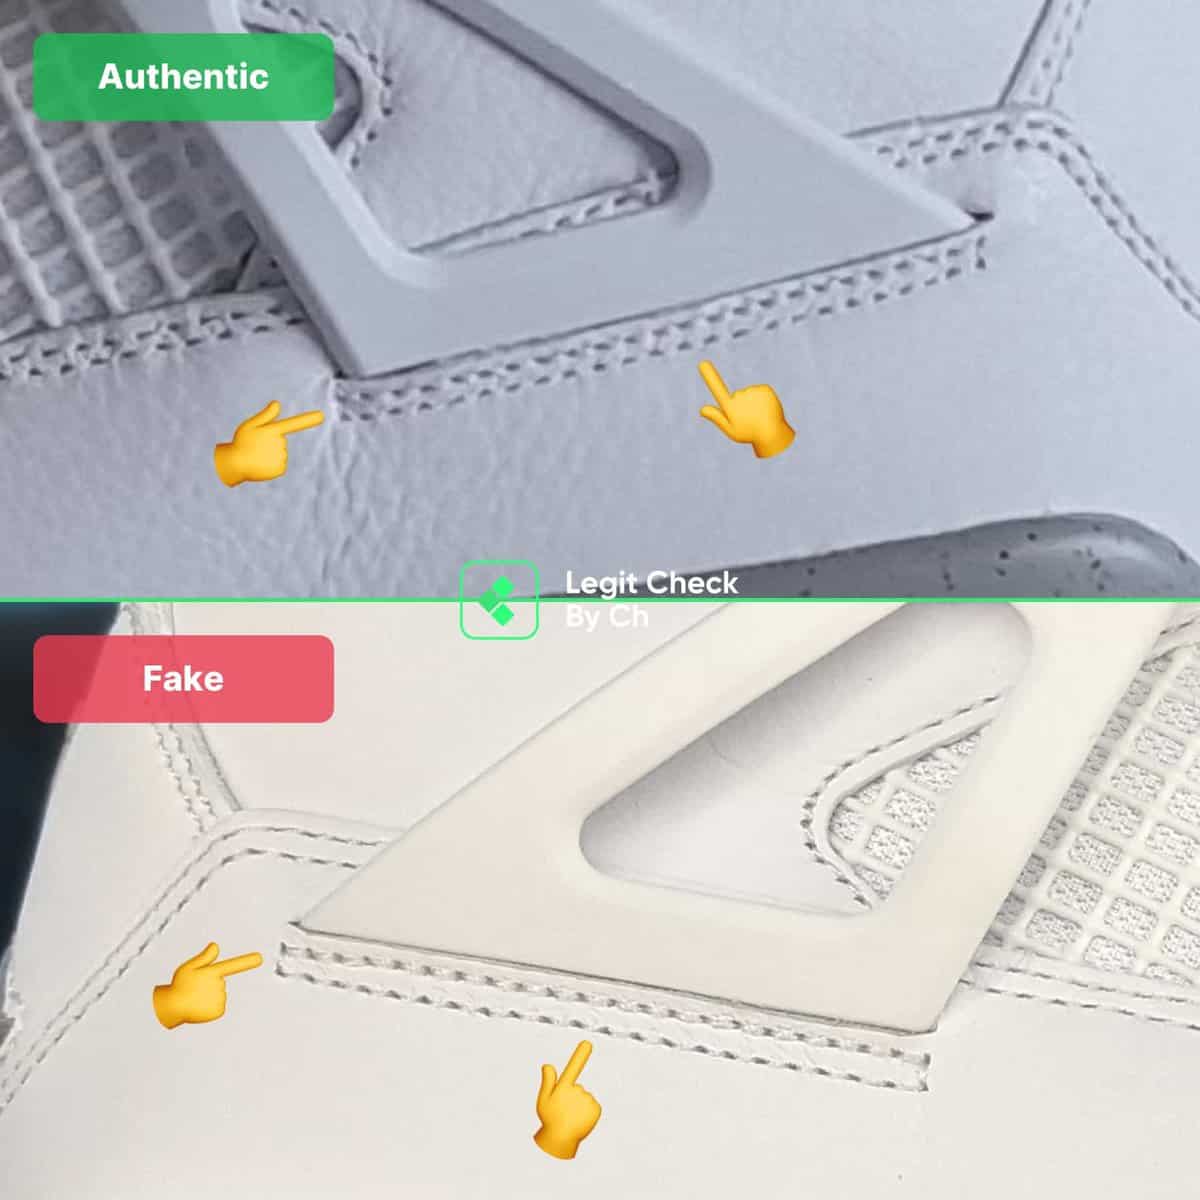 How To Spot Fake Jordan 4 Retro White Oreo Sneakers – LegitGrails